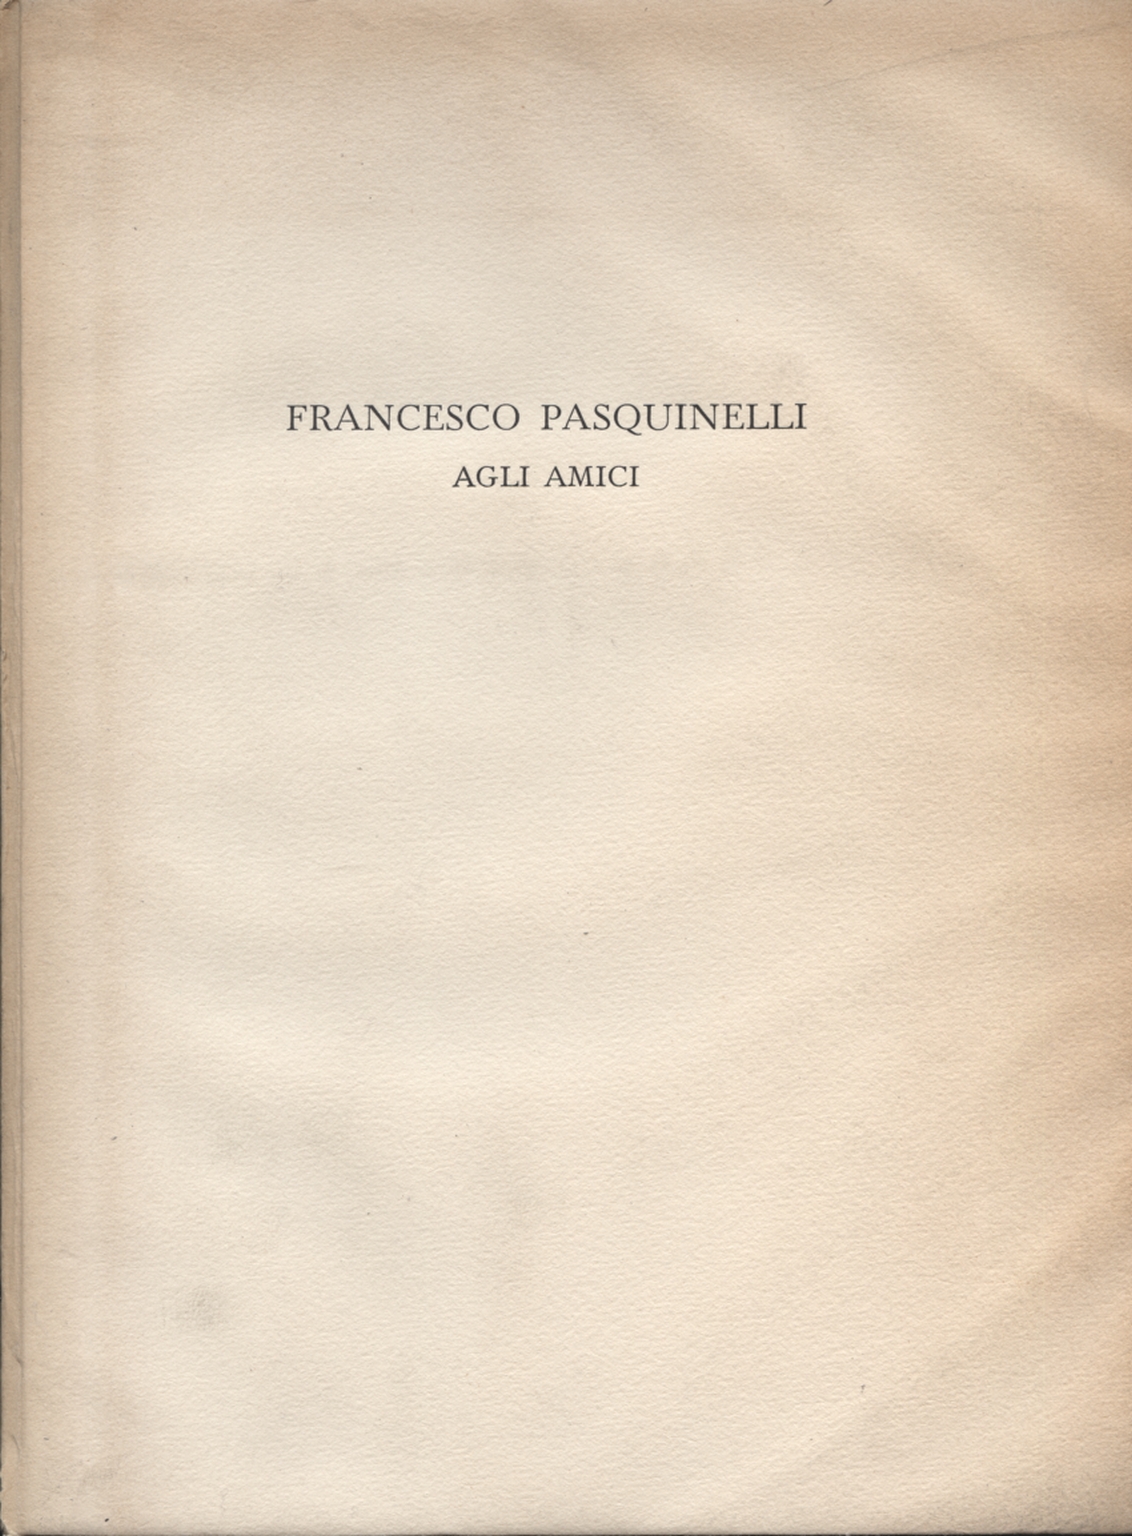 Francesco Pasquinelli friends, Francesco Pasquinelli